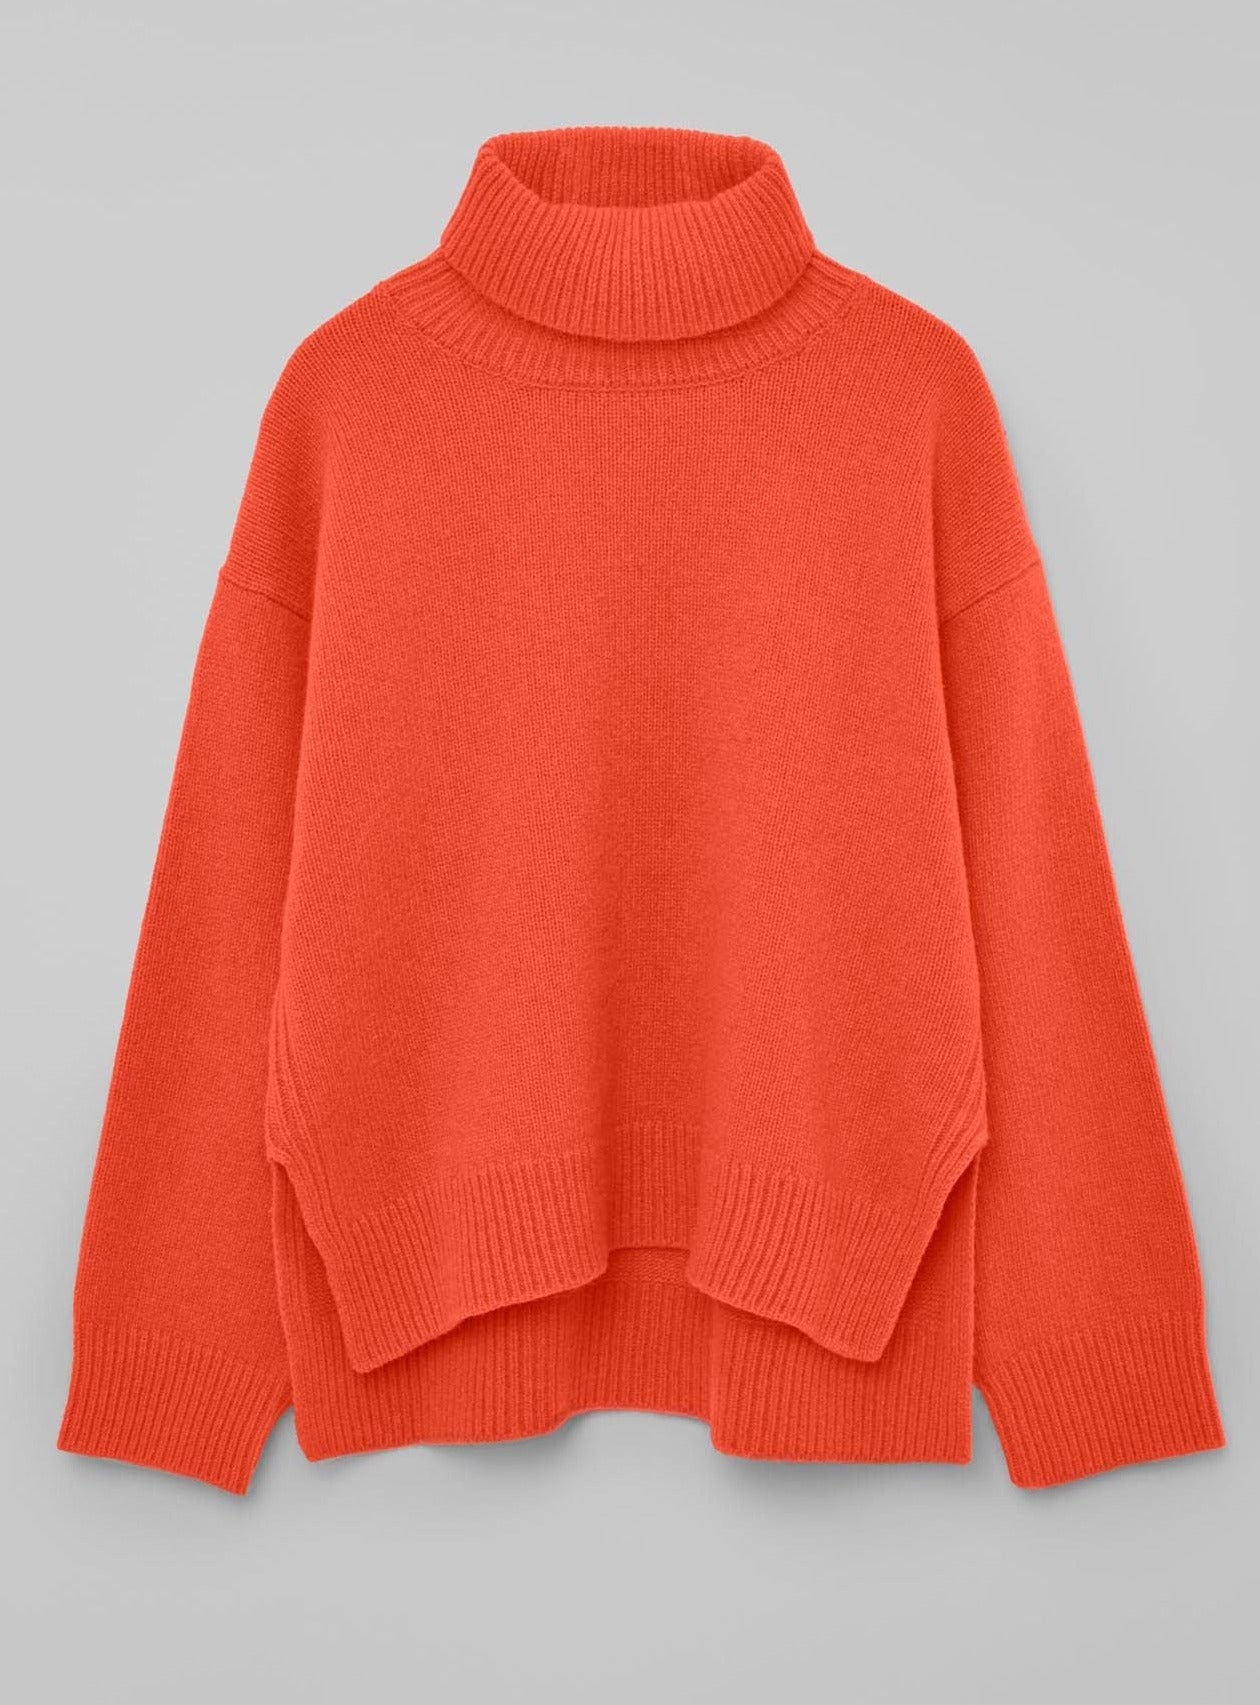 flat product image bright orange wool knitted sweater isla loreak mendian